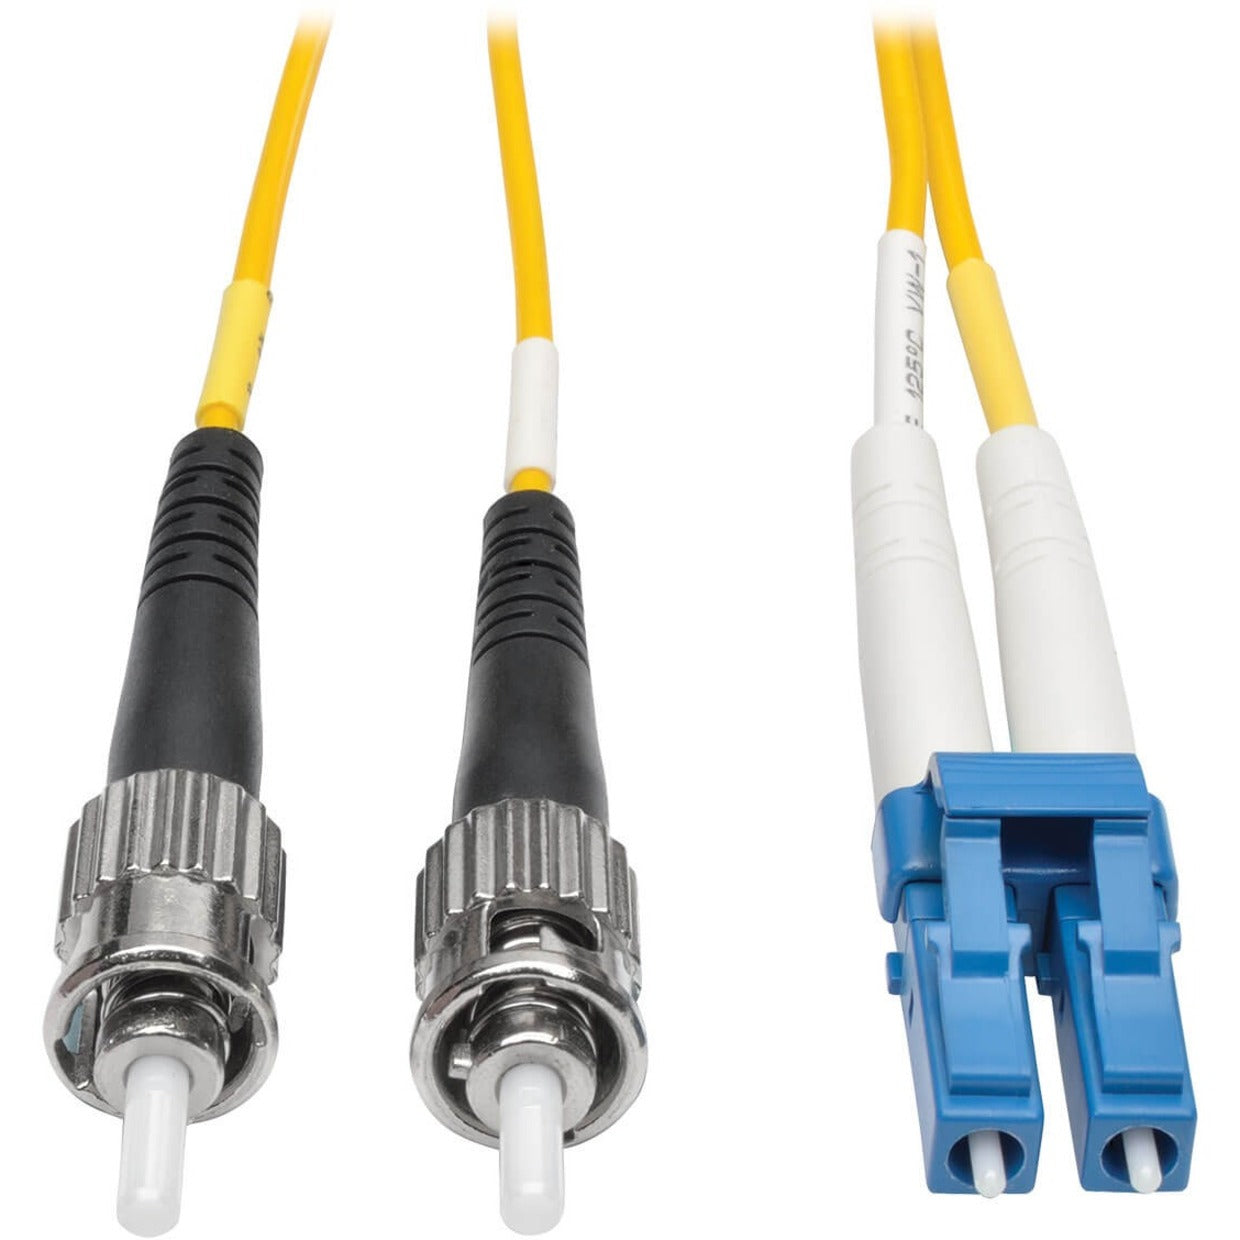 Tripp Lite | Cable de empalme dúplex de fibra óptica Tripp Lite N368-01M 3.30 pies amarillo garantía de por vida